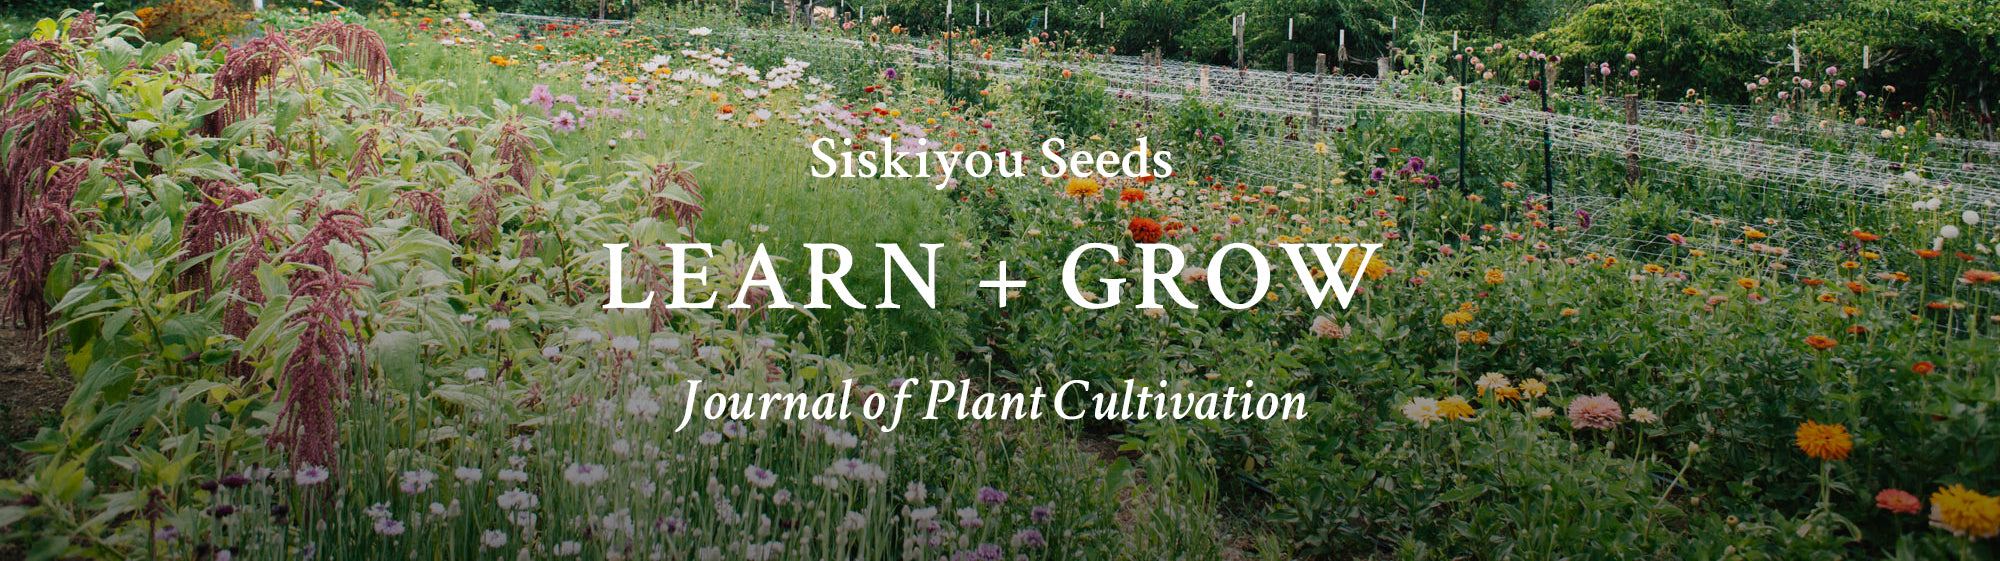 Siskiyou Seeds - Learn + Grow: Journal of Plant Cultivation